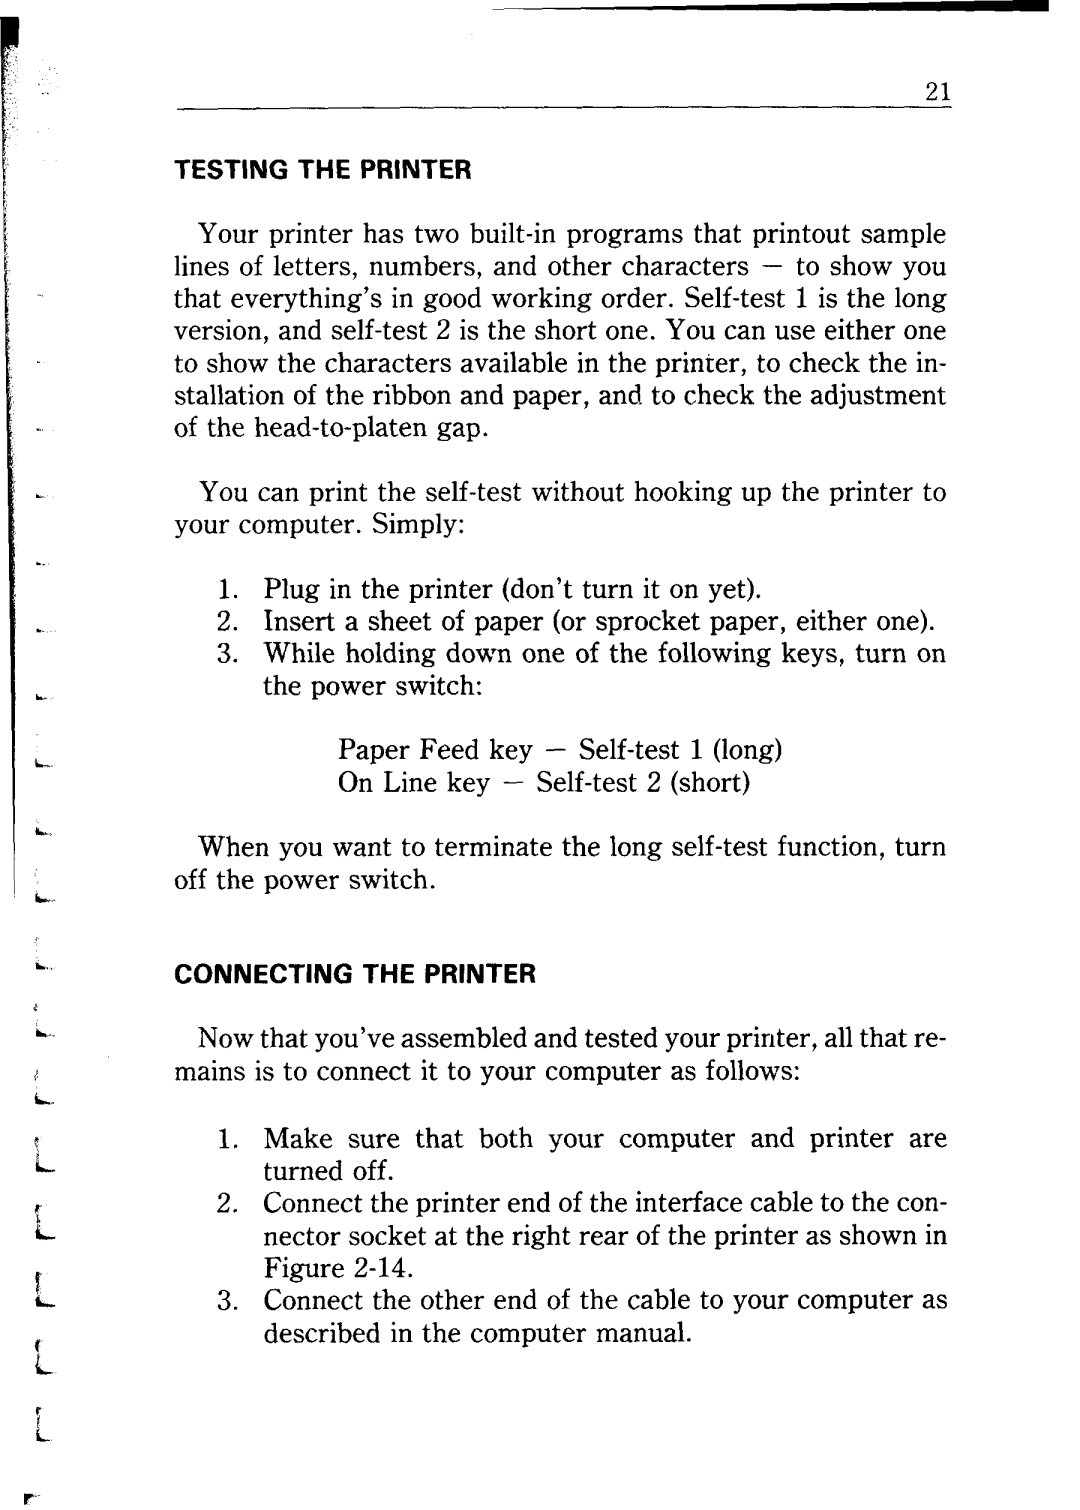 Star Micronics NB24-10/15 user manual Plug in the printer don’t turn it on yet 